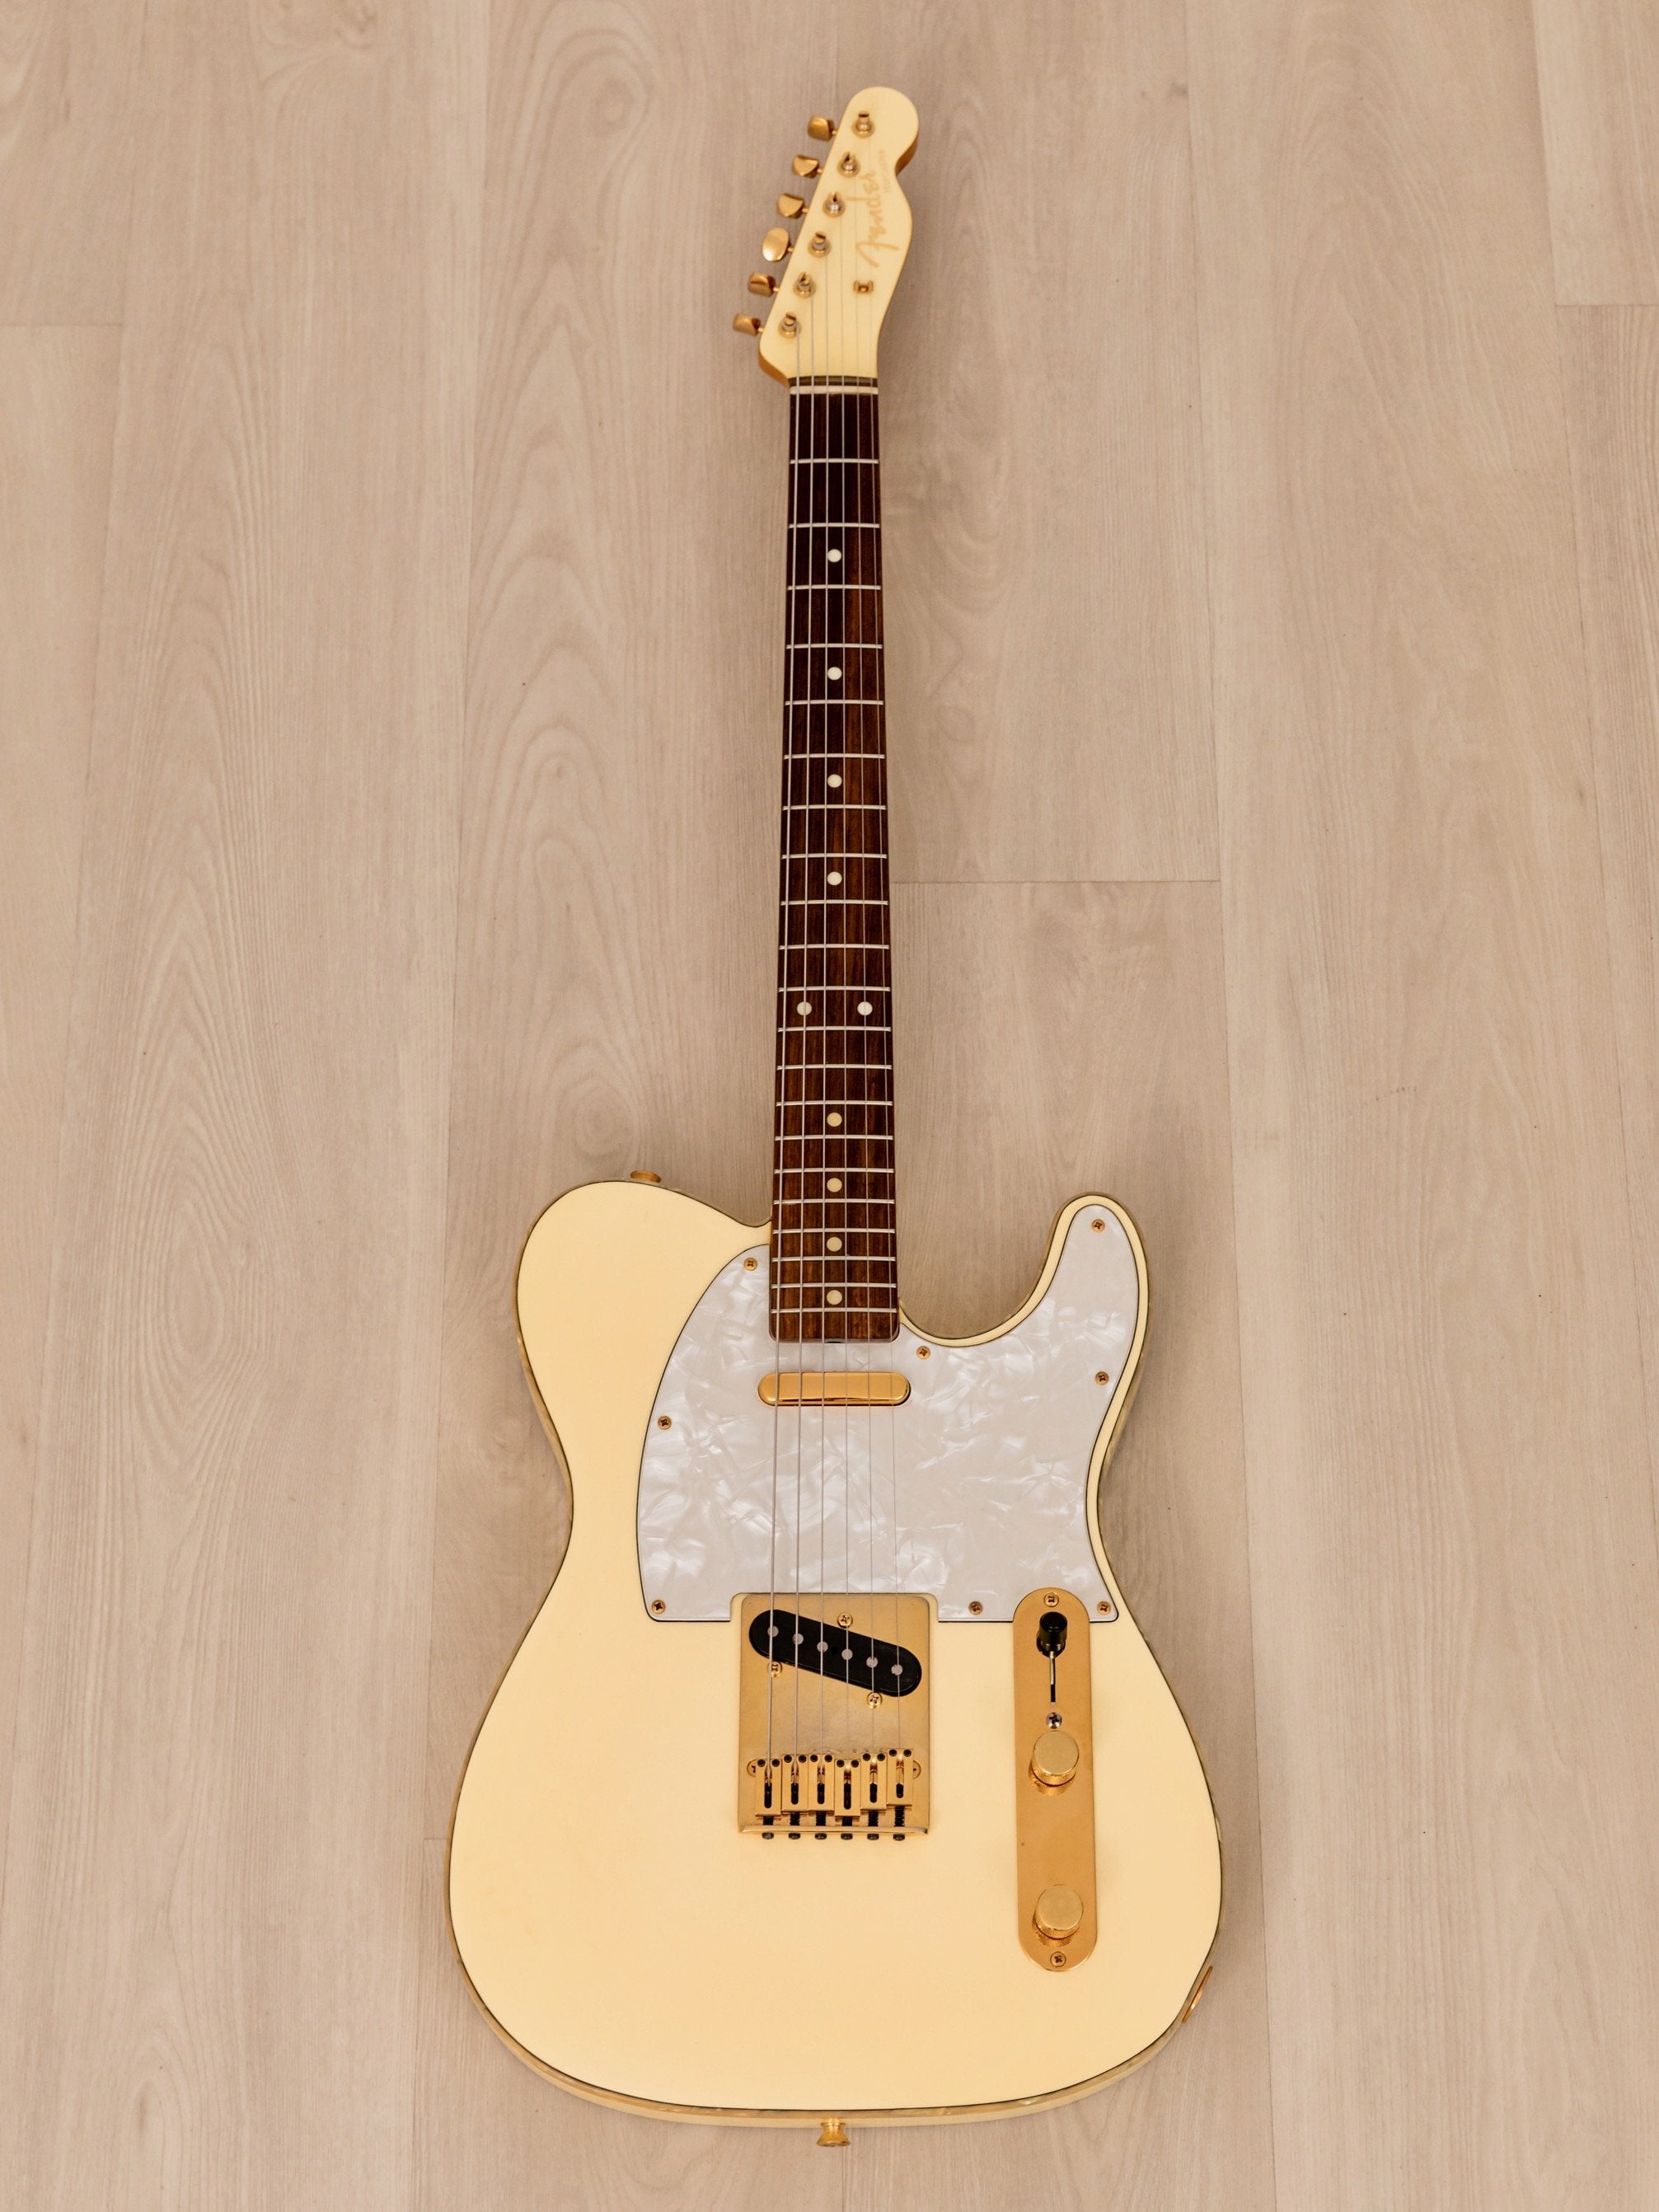 1995 Fender Telecaster Custom Limited Edition TLG94P Vintage White w/ Gold Hardware, Case, Japan MIJ